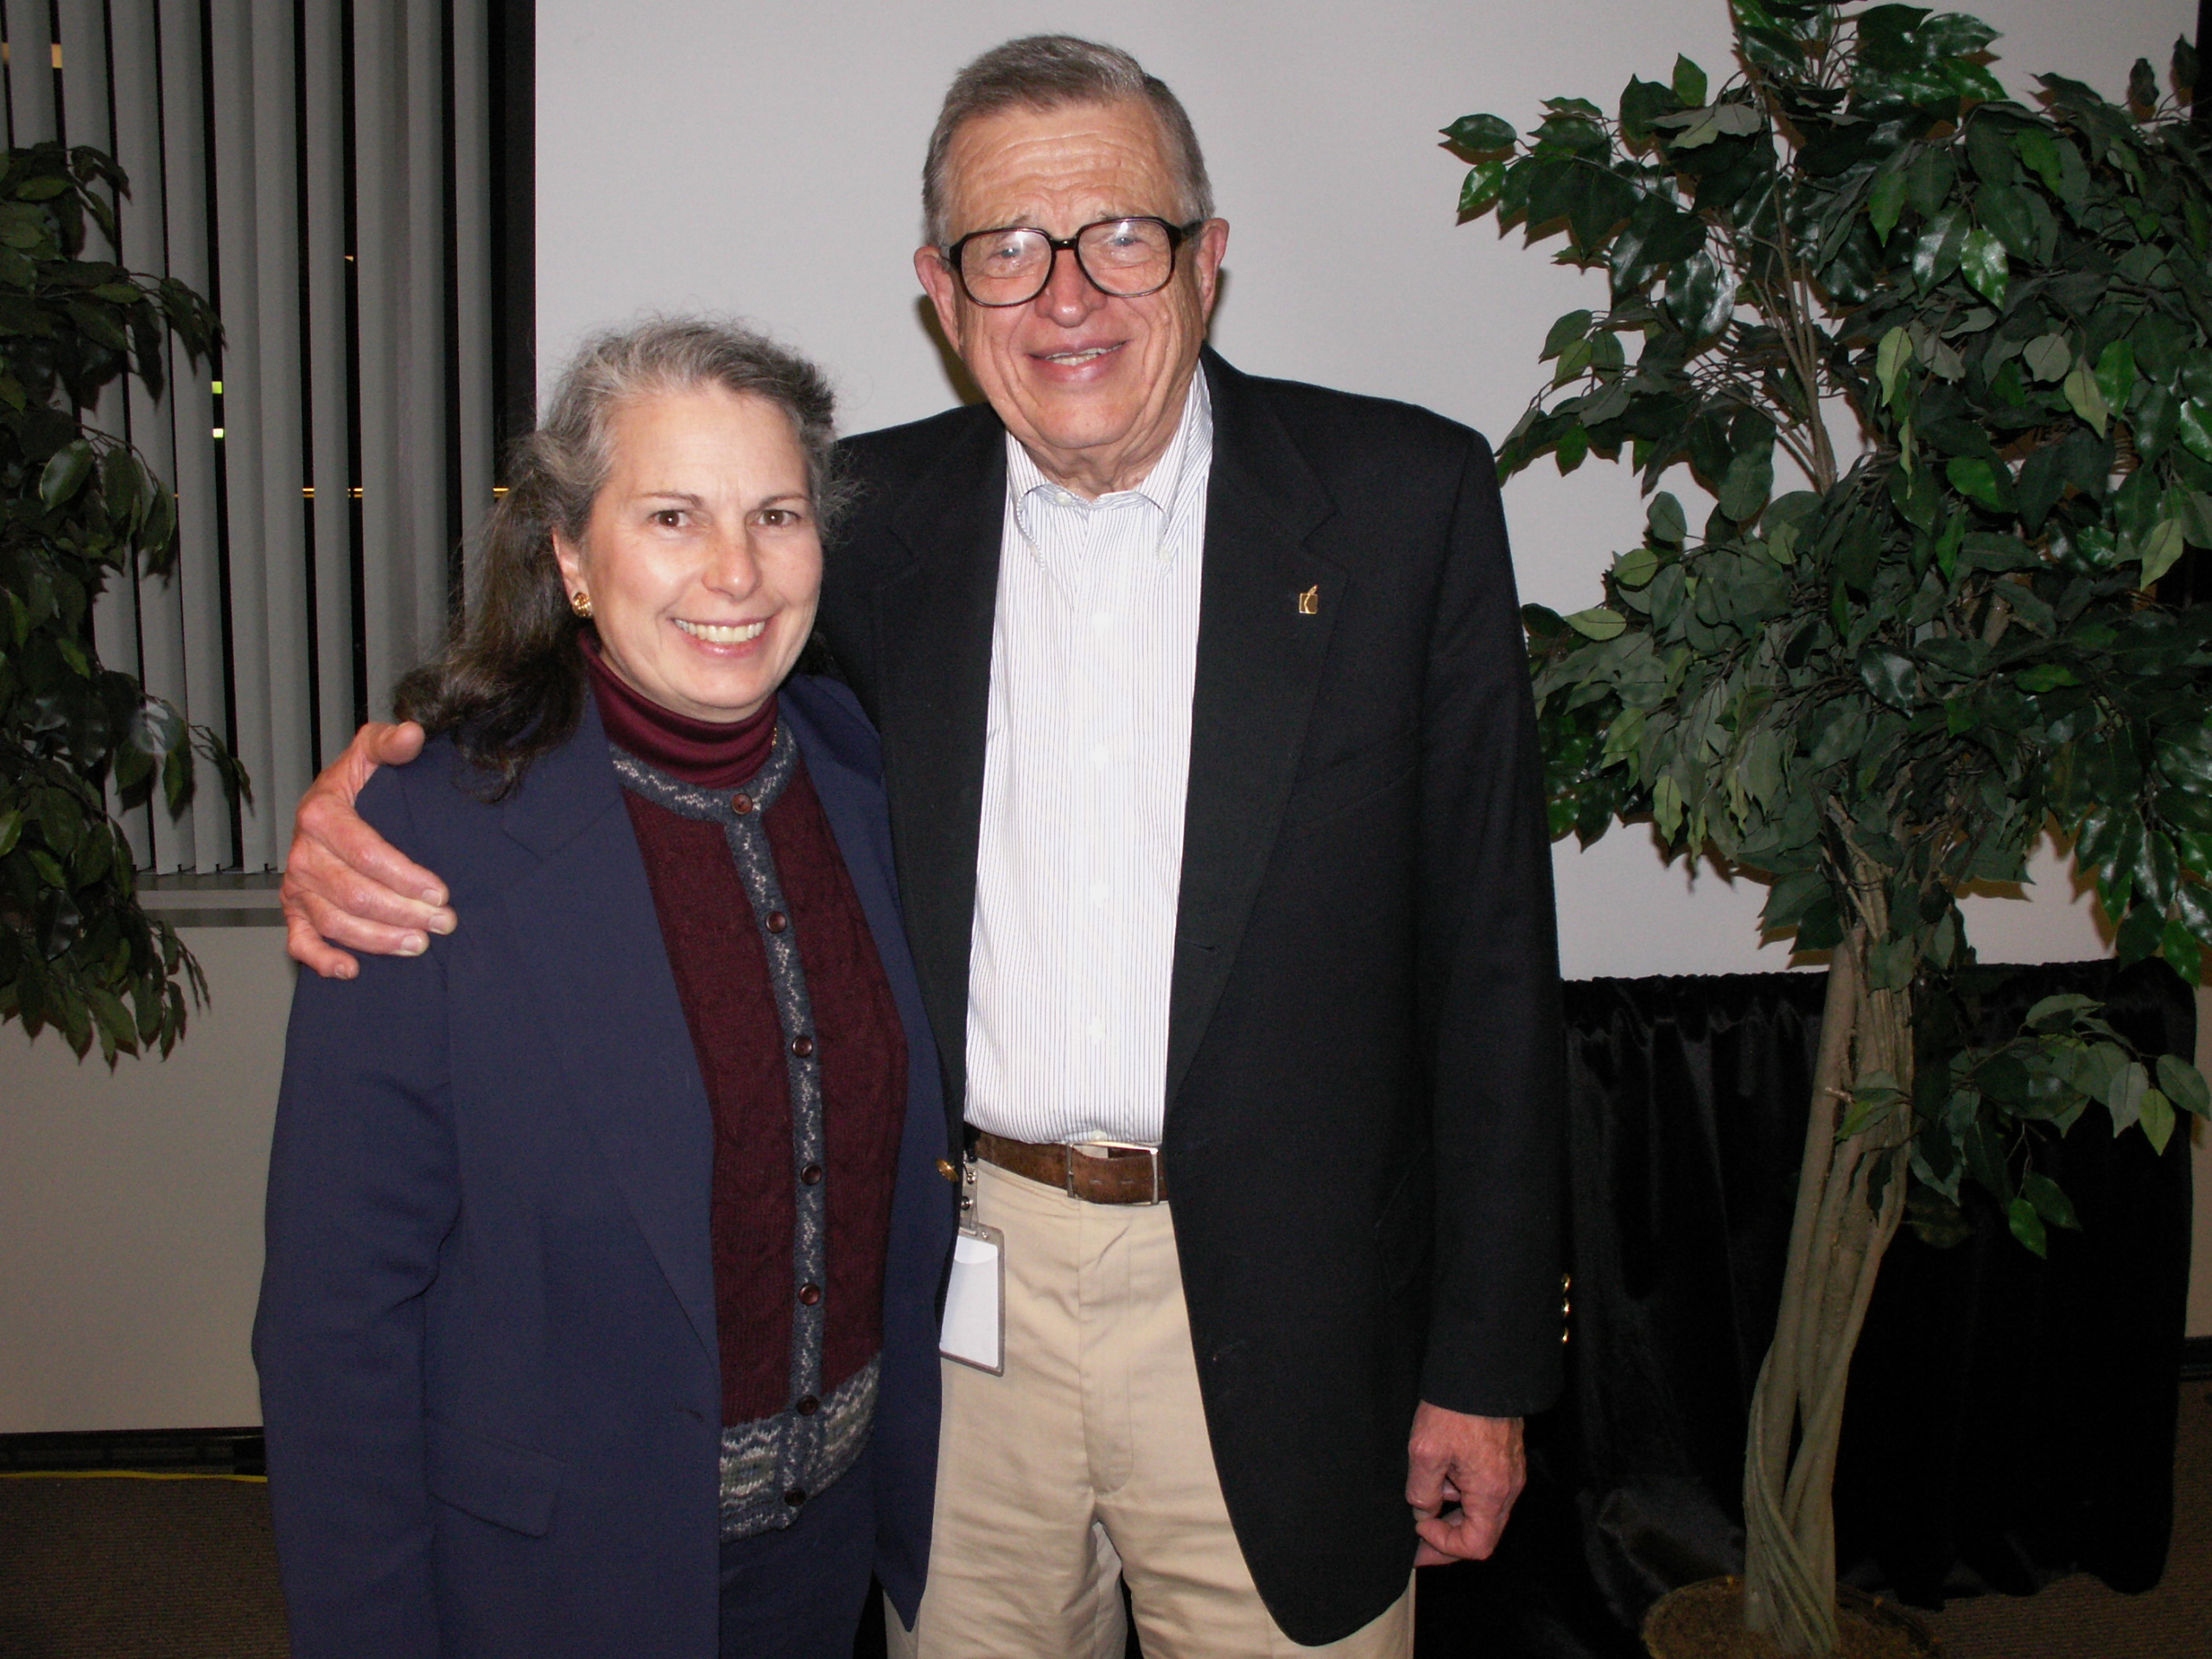 Jeanne Dennis and Chuck Colson